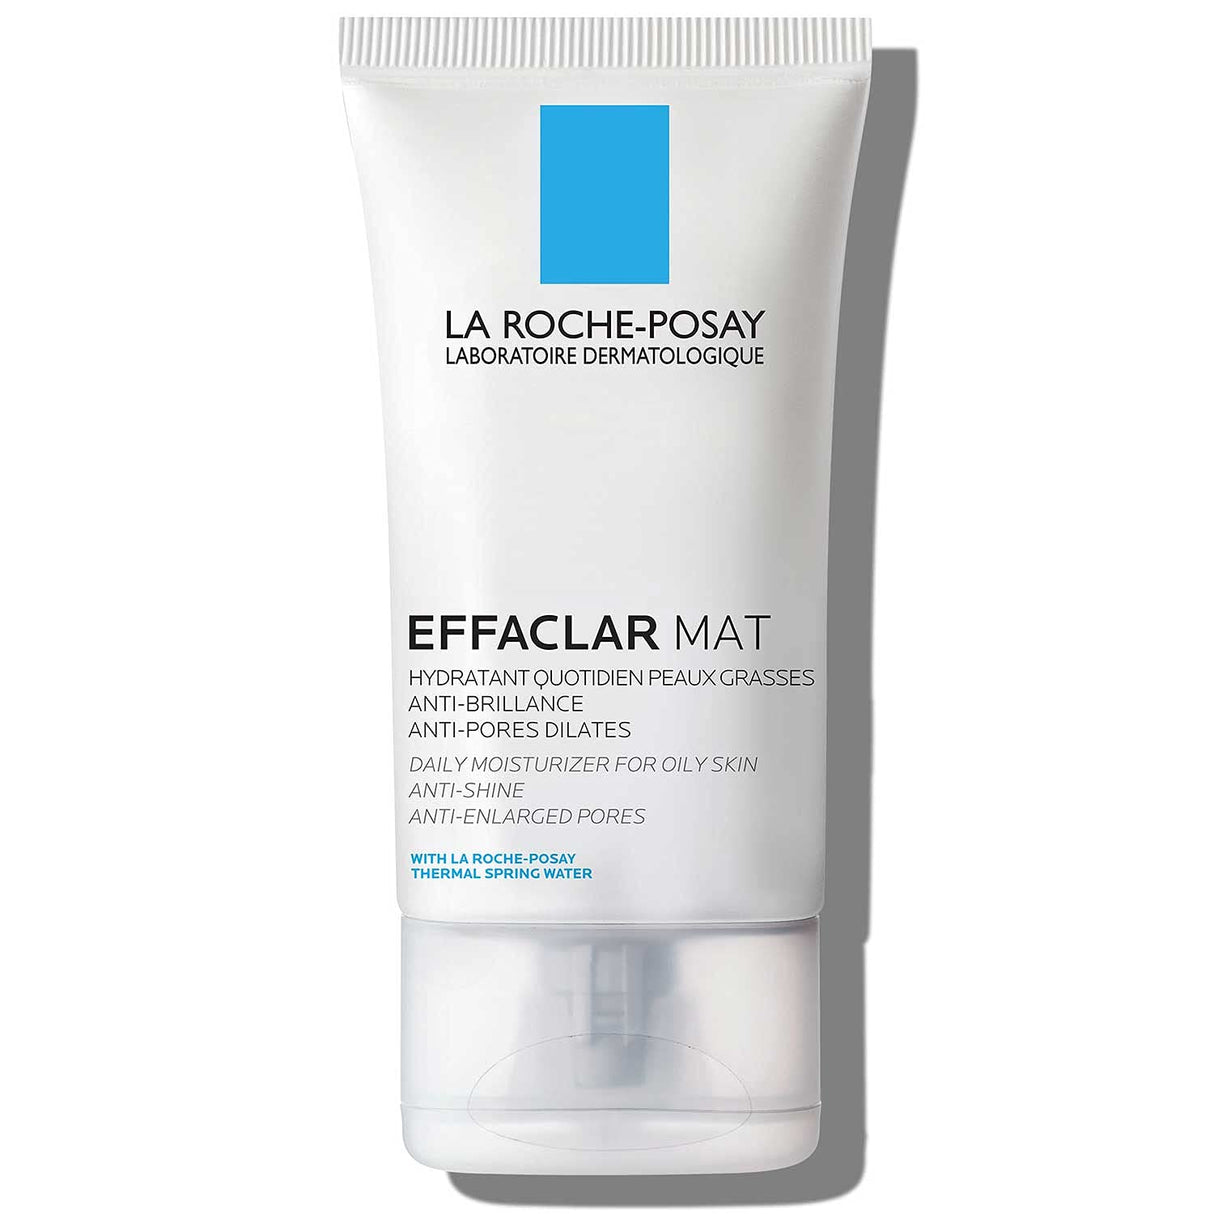 La Roche-Posay Effaclar Mat Face Moisturizer for Oily Skin - LRPW (1.35 fl. oz.)